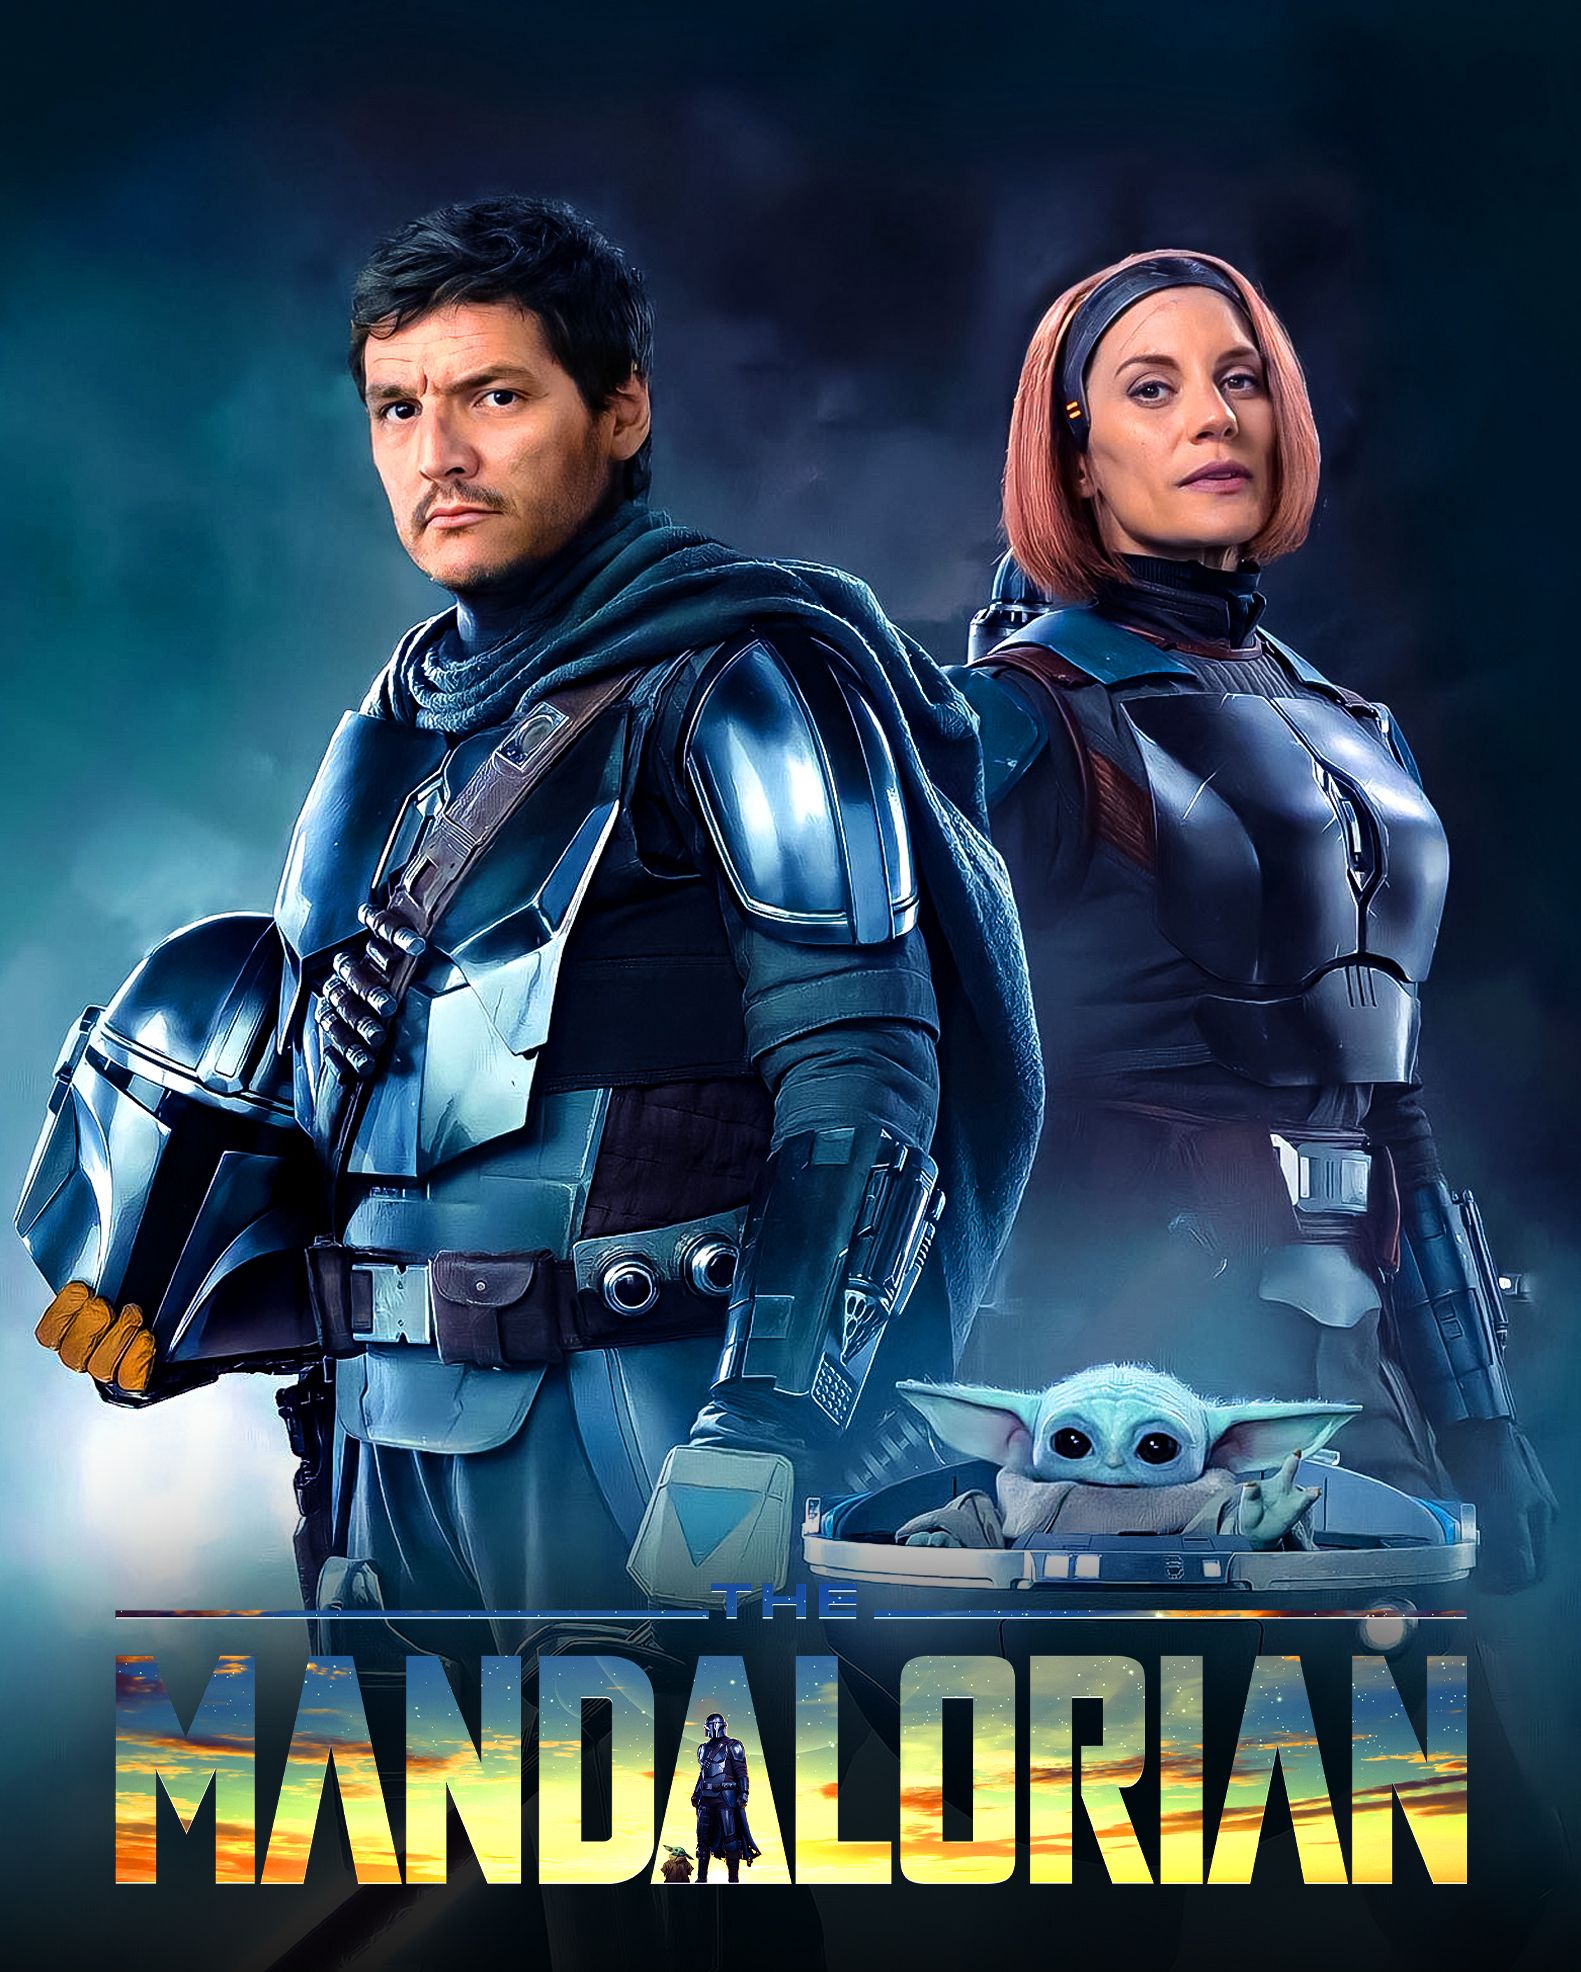 Star Wars The Mandalorian & Grogu Film Announcement Info